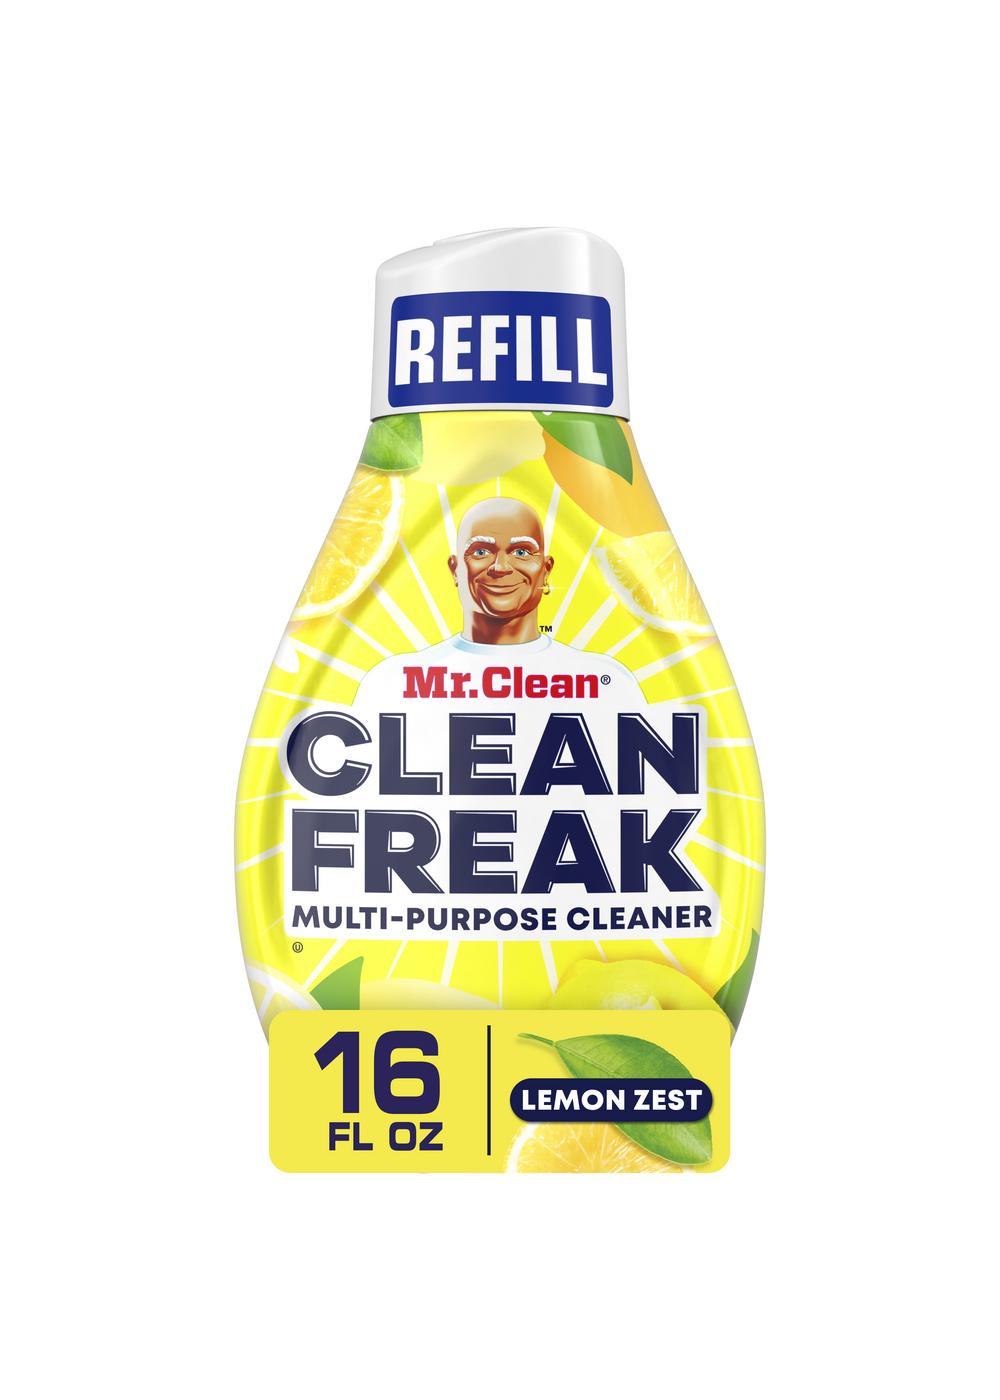 Mr. Clean Cleaner, Deep Cleaning Mist, Clean Freak, Refill, Fresh 16 fl oz, Shop